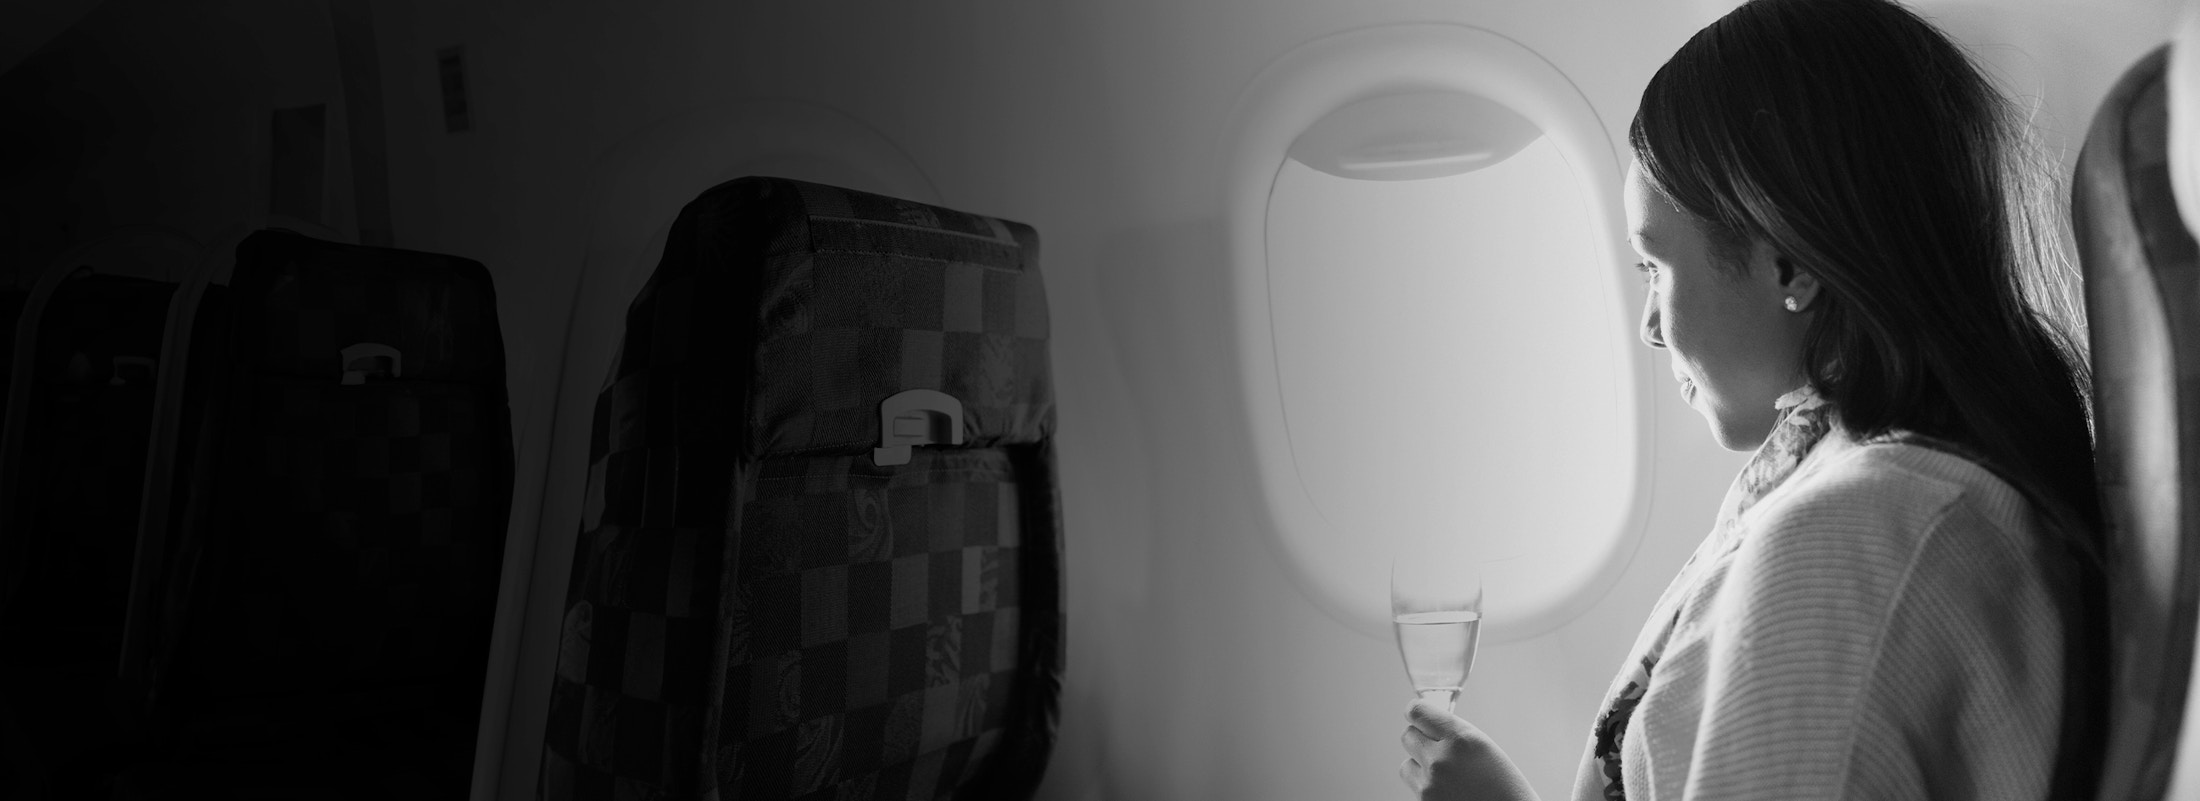 woman sitting on a plane